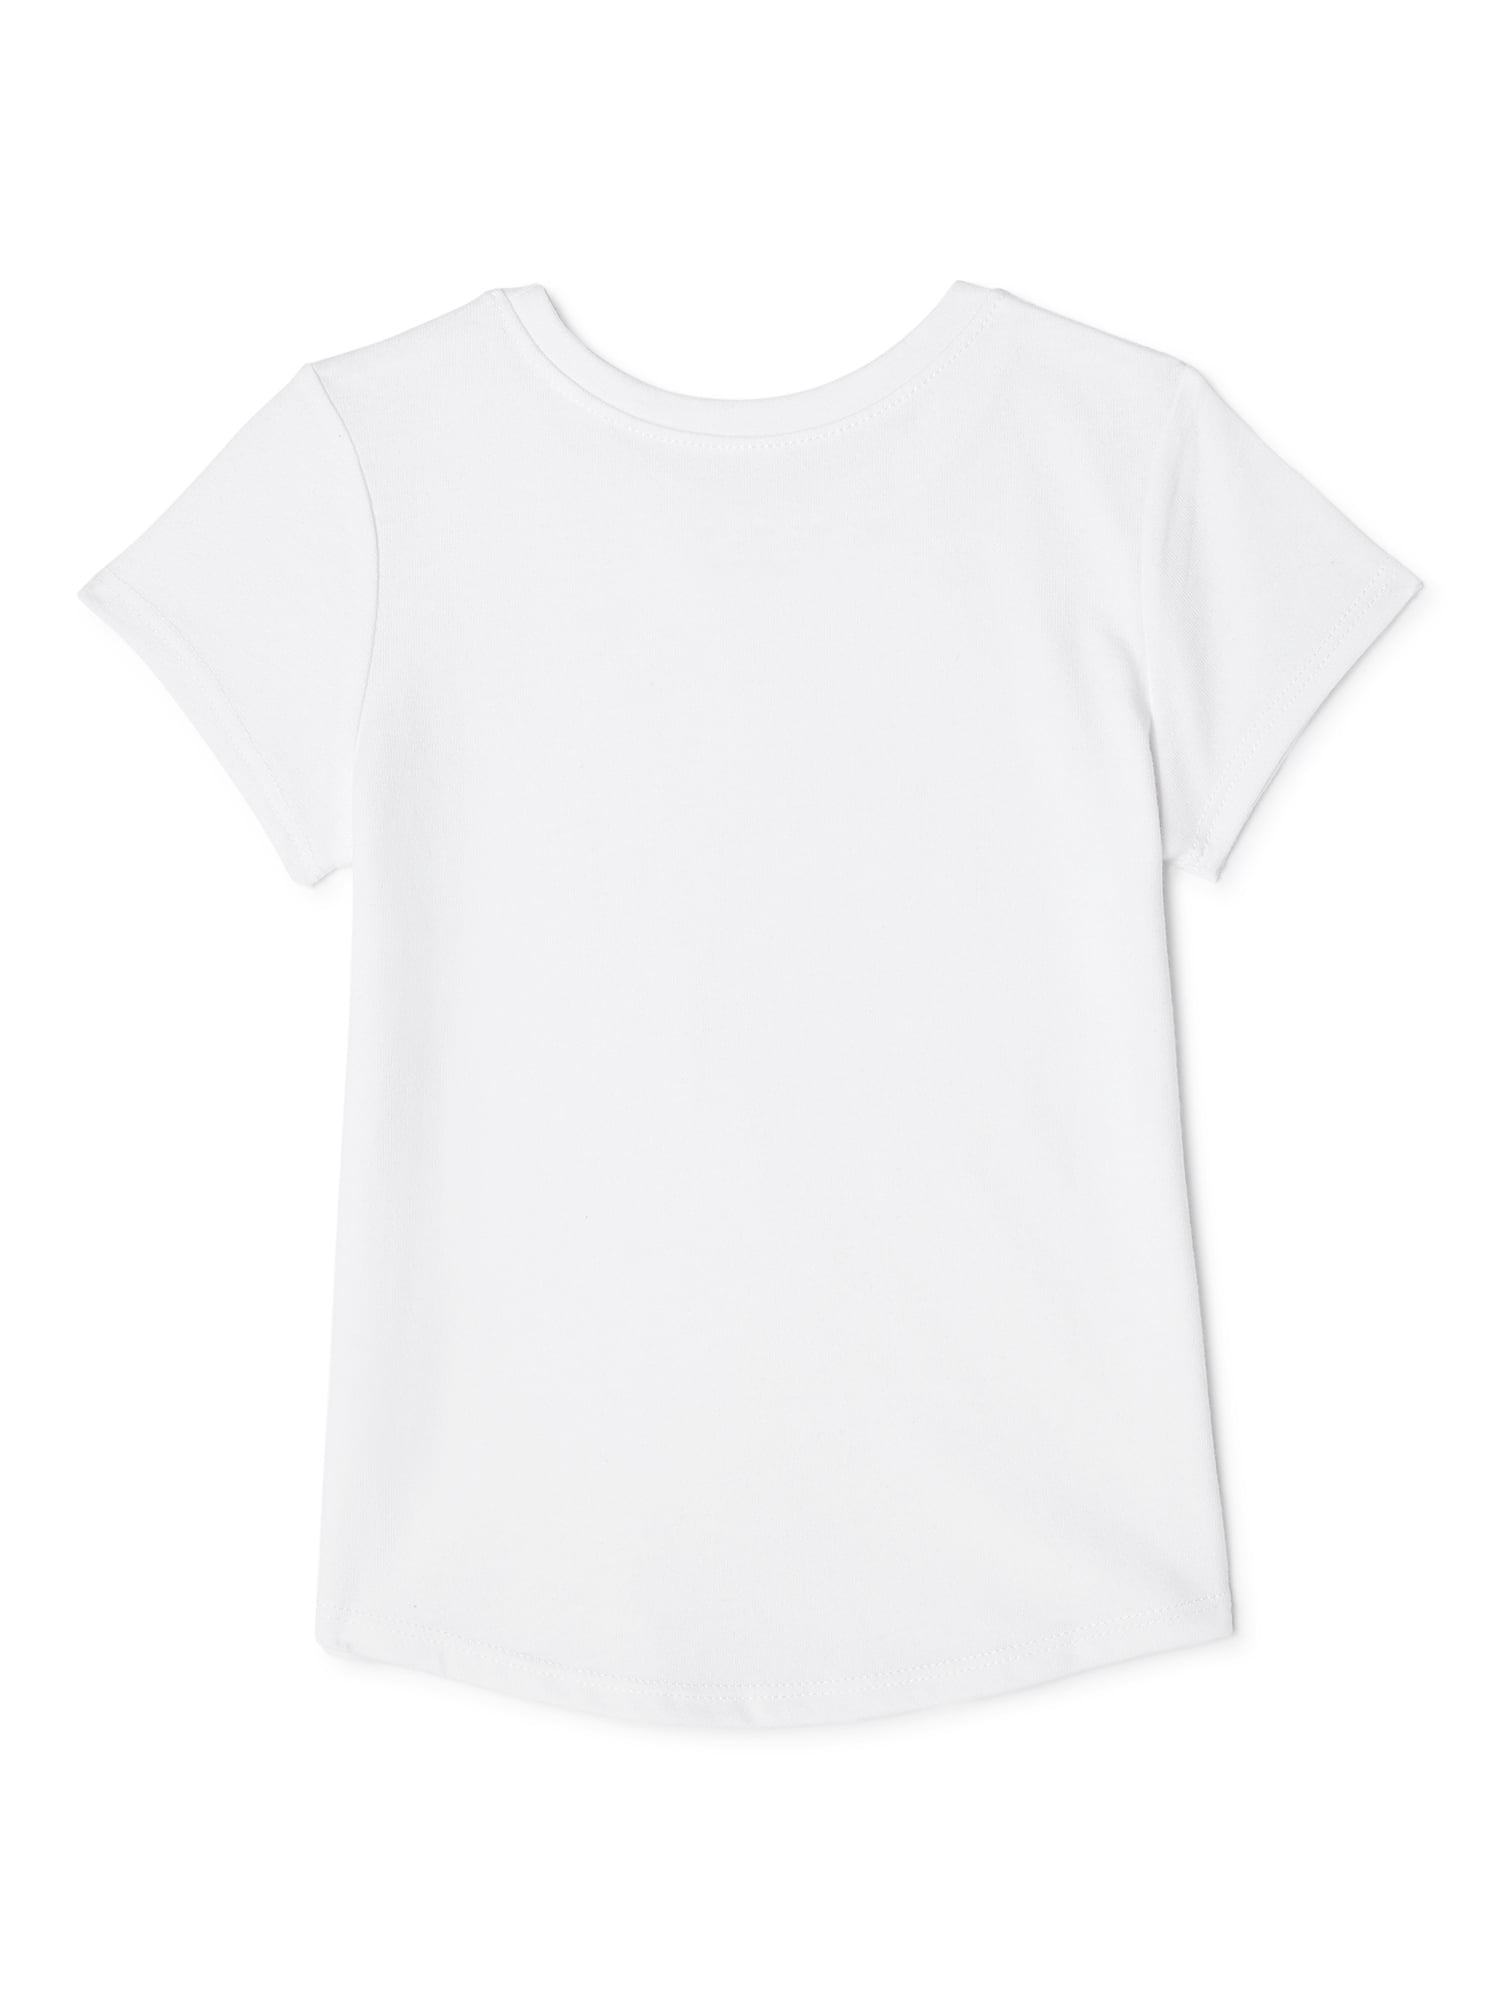 LAPASA 4 Pack 100% Cotton Kids Plain T-Shirts Hypoallergenic Tee for Boys  Girls Children School Uniform K01 (4 White, 3-4 Years) : :  Fashion